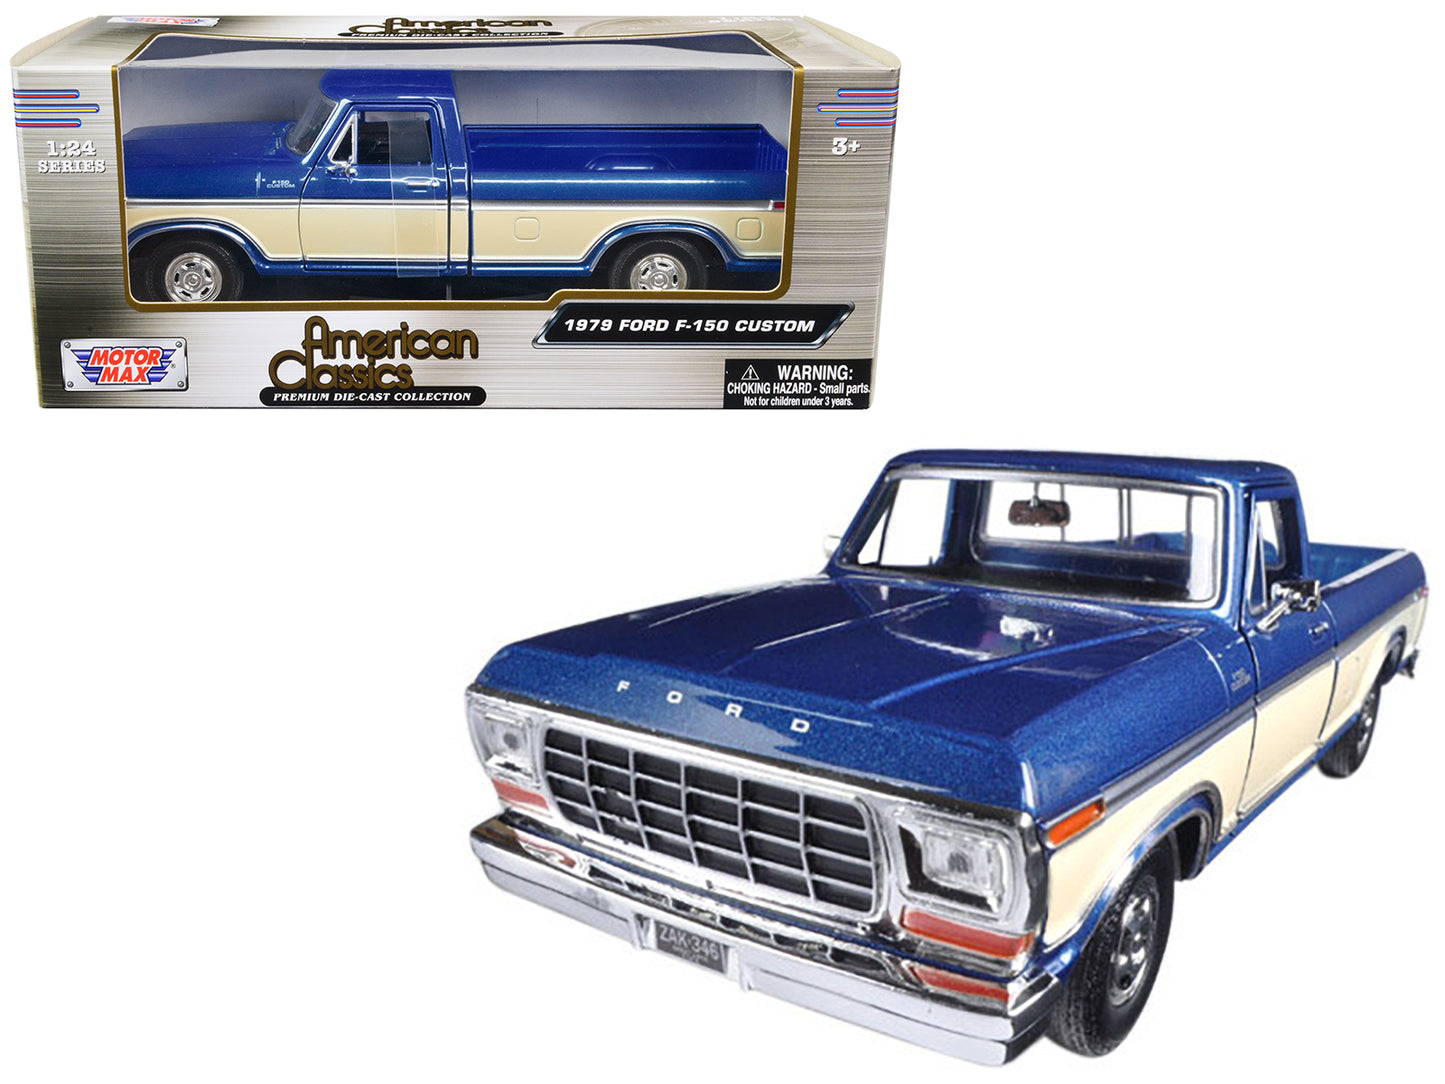 1979 ford f-150 pickup truck 2 tone blue/cream 1/24 diecast model car